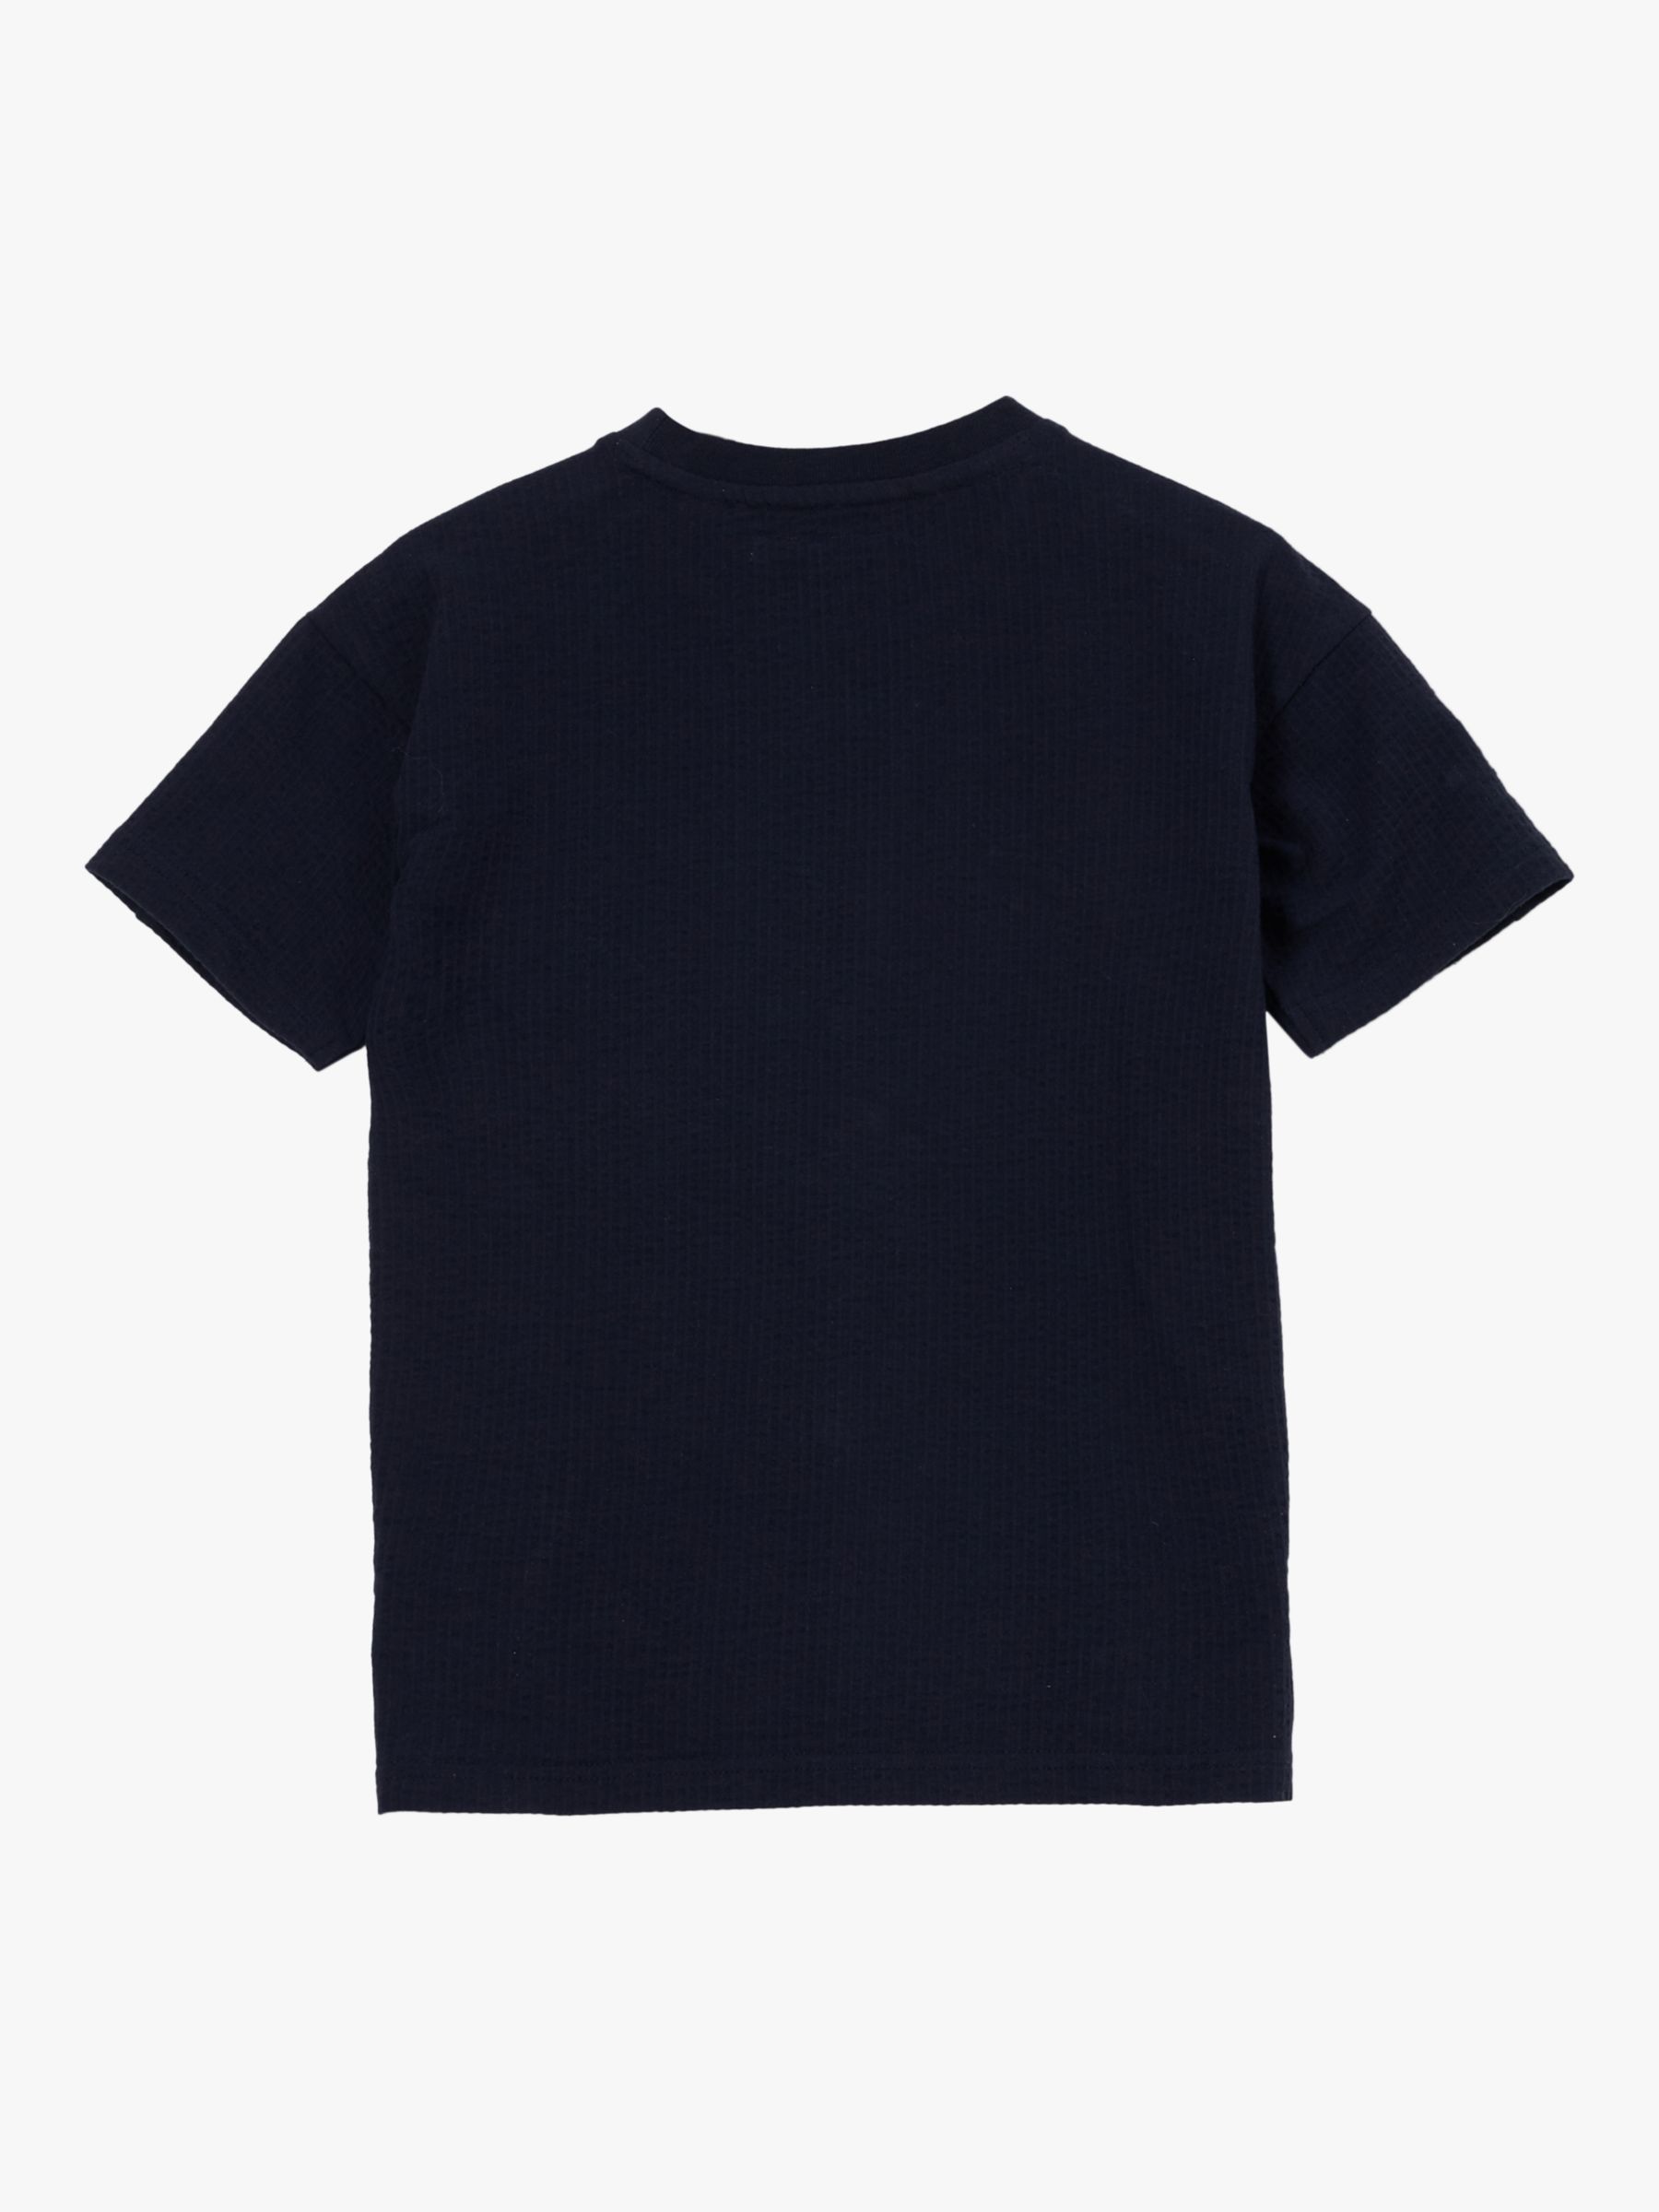 Buy Angel & Rocket Kids' Hector Textured T-Shirt, Navy Online at johnlewis.com